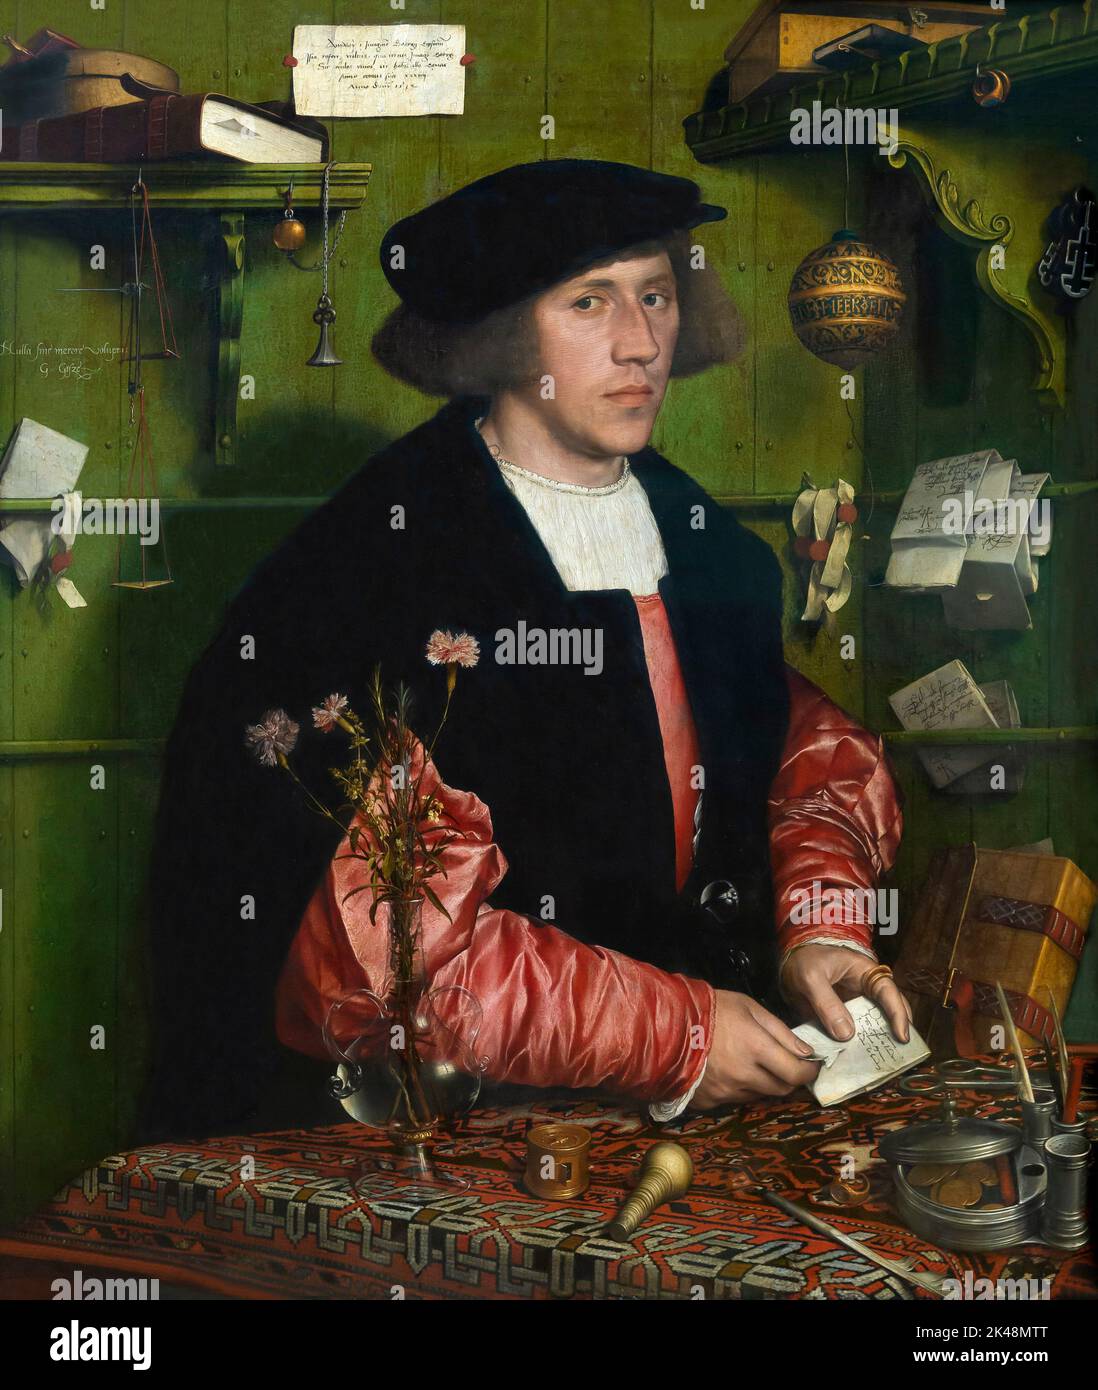 Retrato del mercader, Georg Gisze, Hans Holbein el Joven, 1532, Gemaldegalerie, Berlín, Alemania, Europa Foto de stock